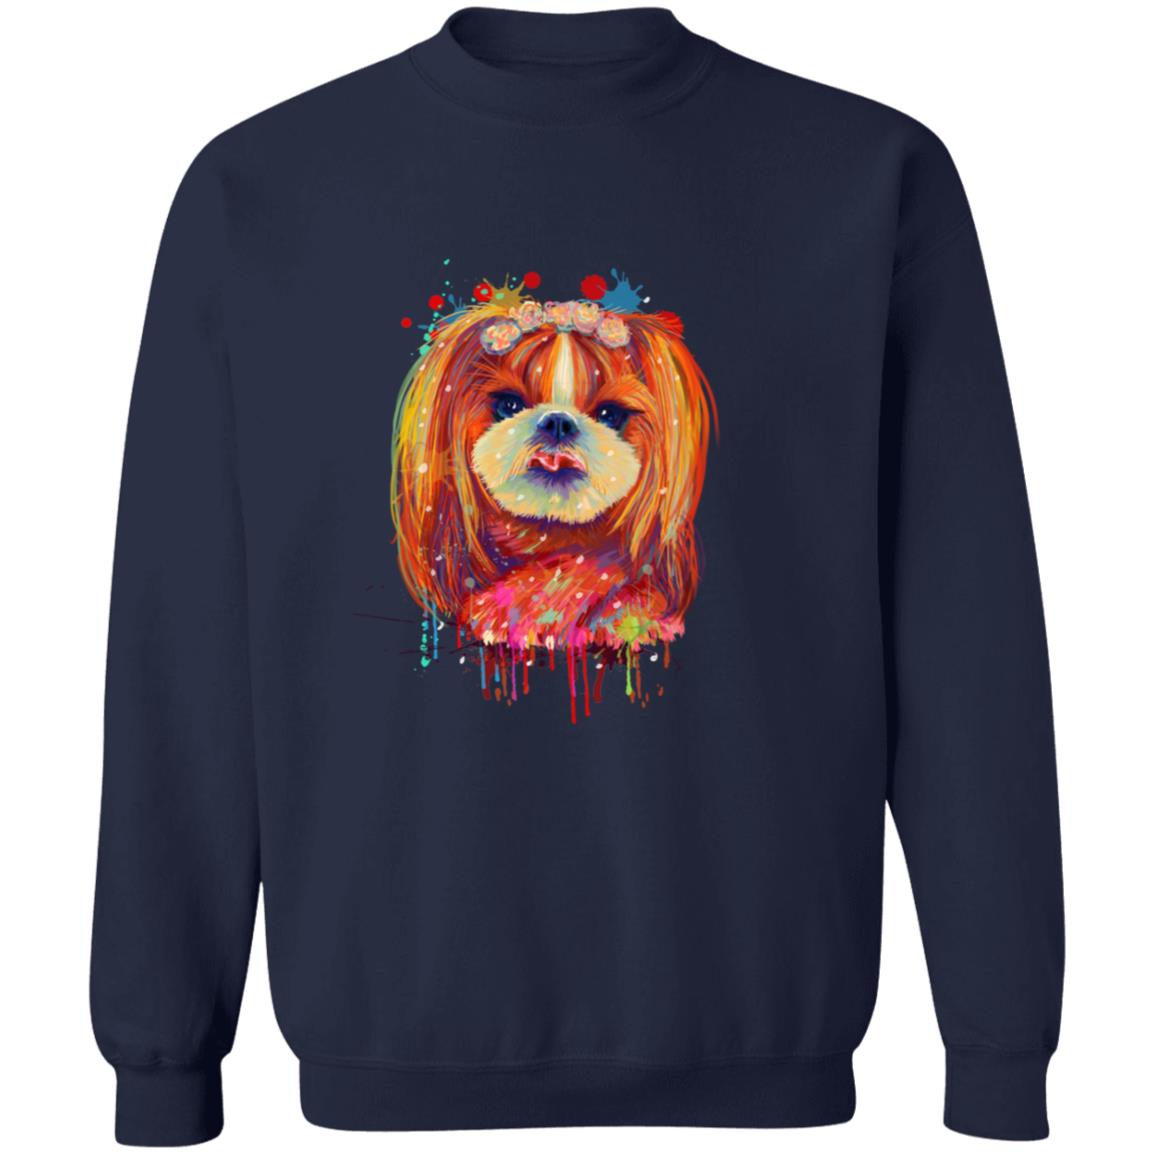 Cute Handdrawn Digital Art Shih Tzu dog Unisex Crewneck Sweatshirt-Family-Gift-Planet